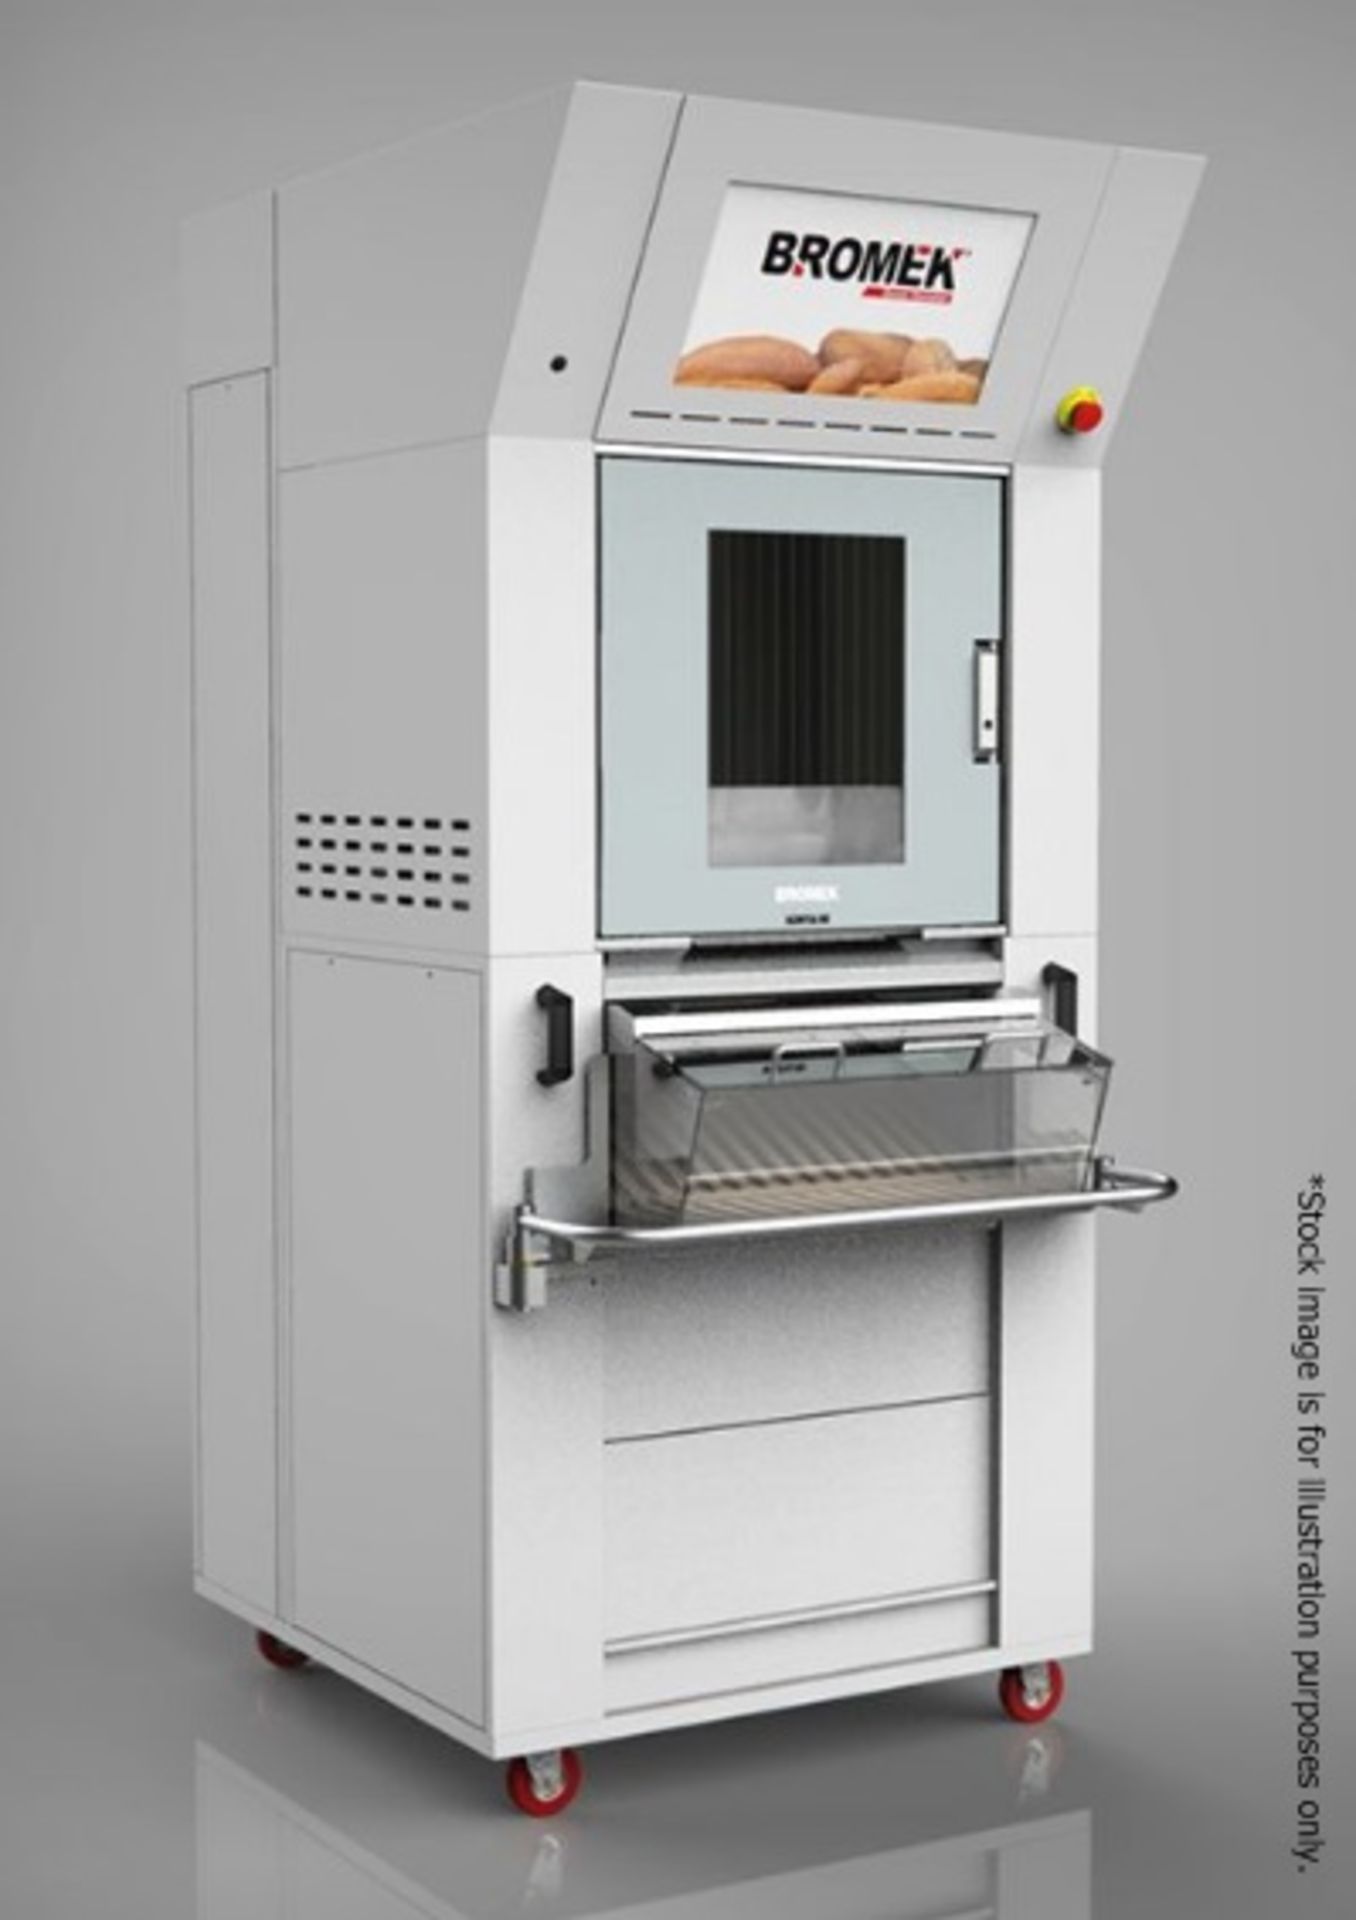 ***OFFERS*** 1 x BROMEK Bread Baking Automat - Brand New - CL495 - Location: Tunbridge Wells, Kent